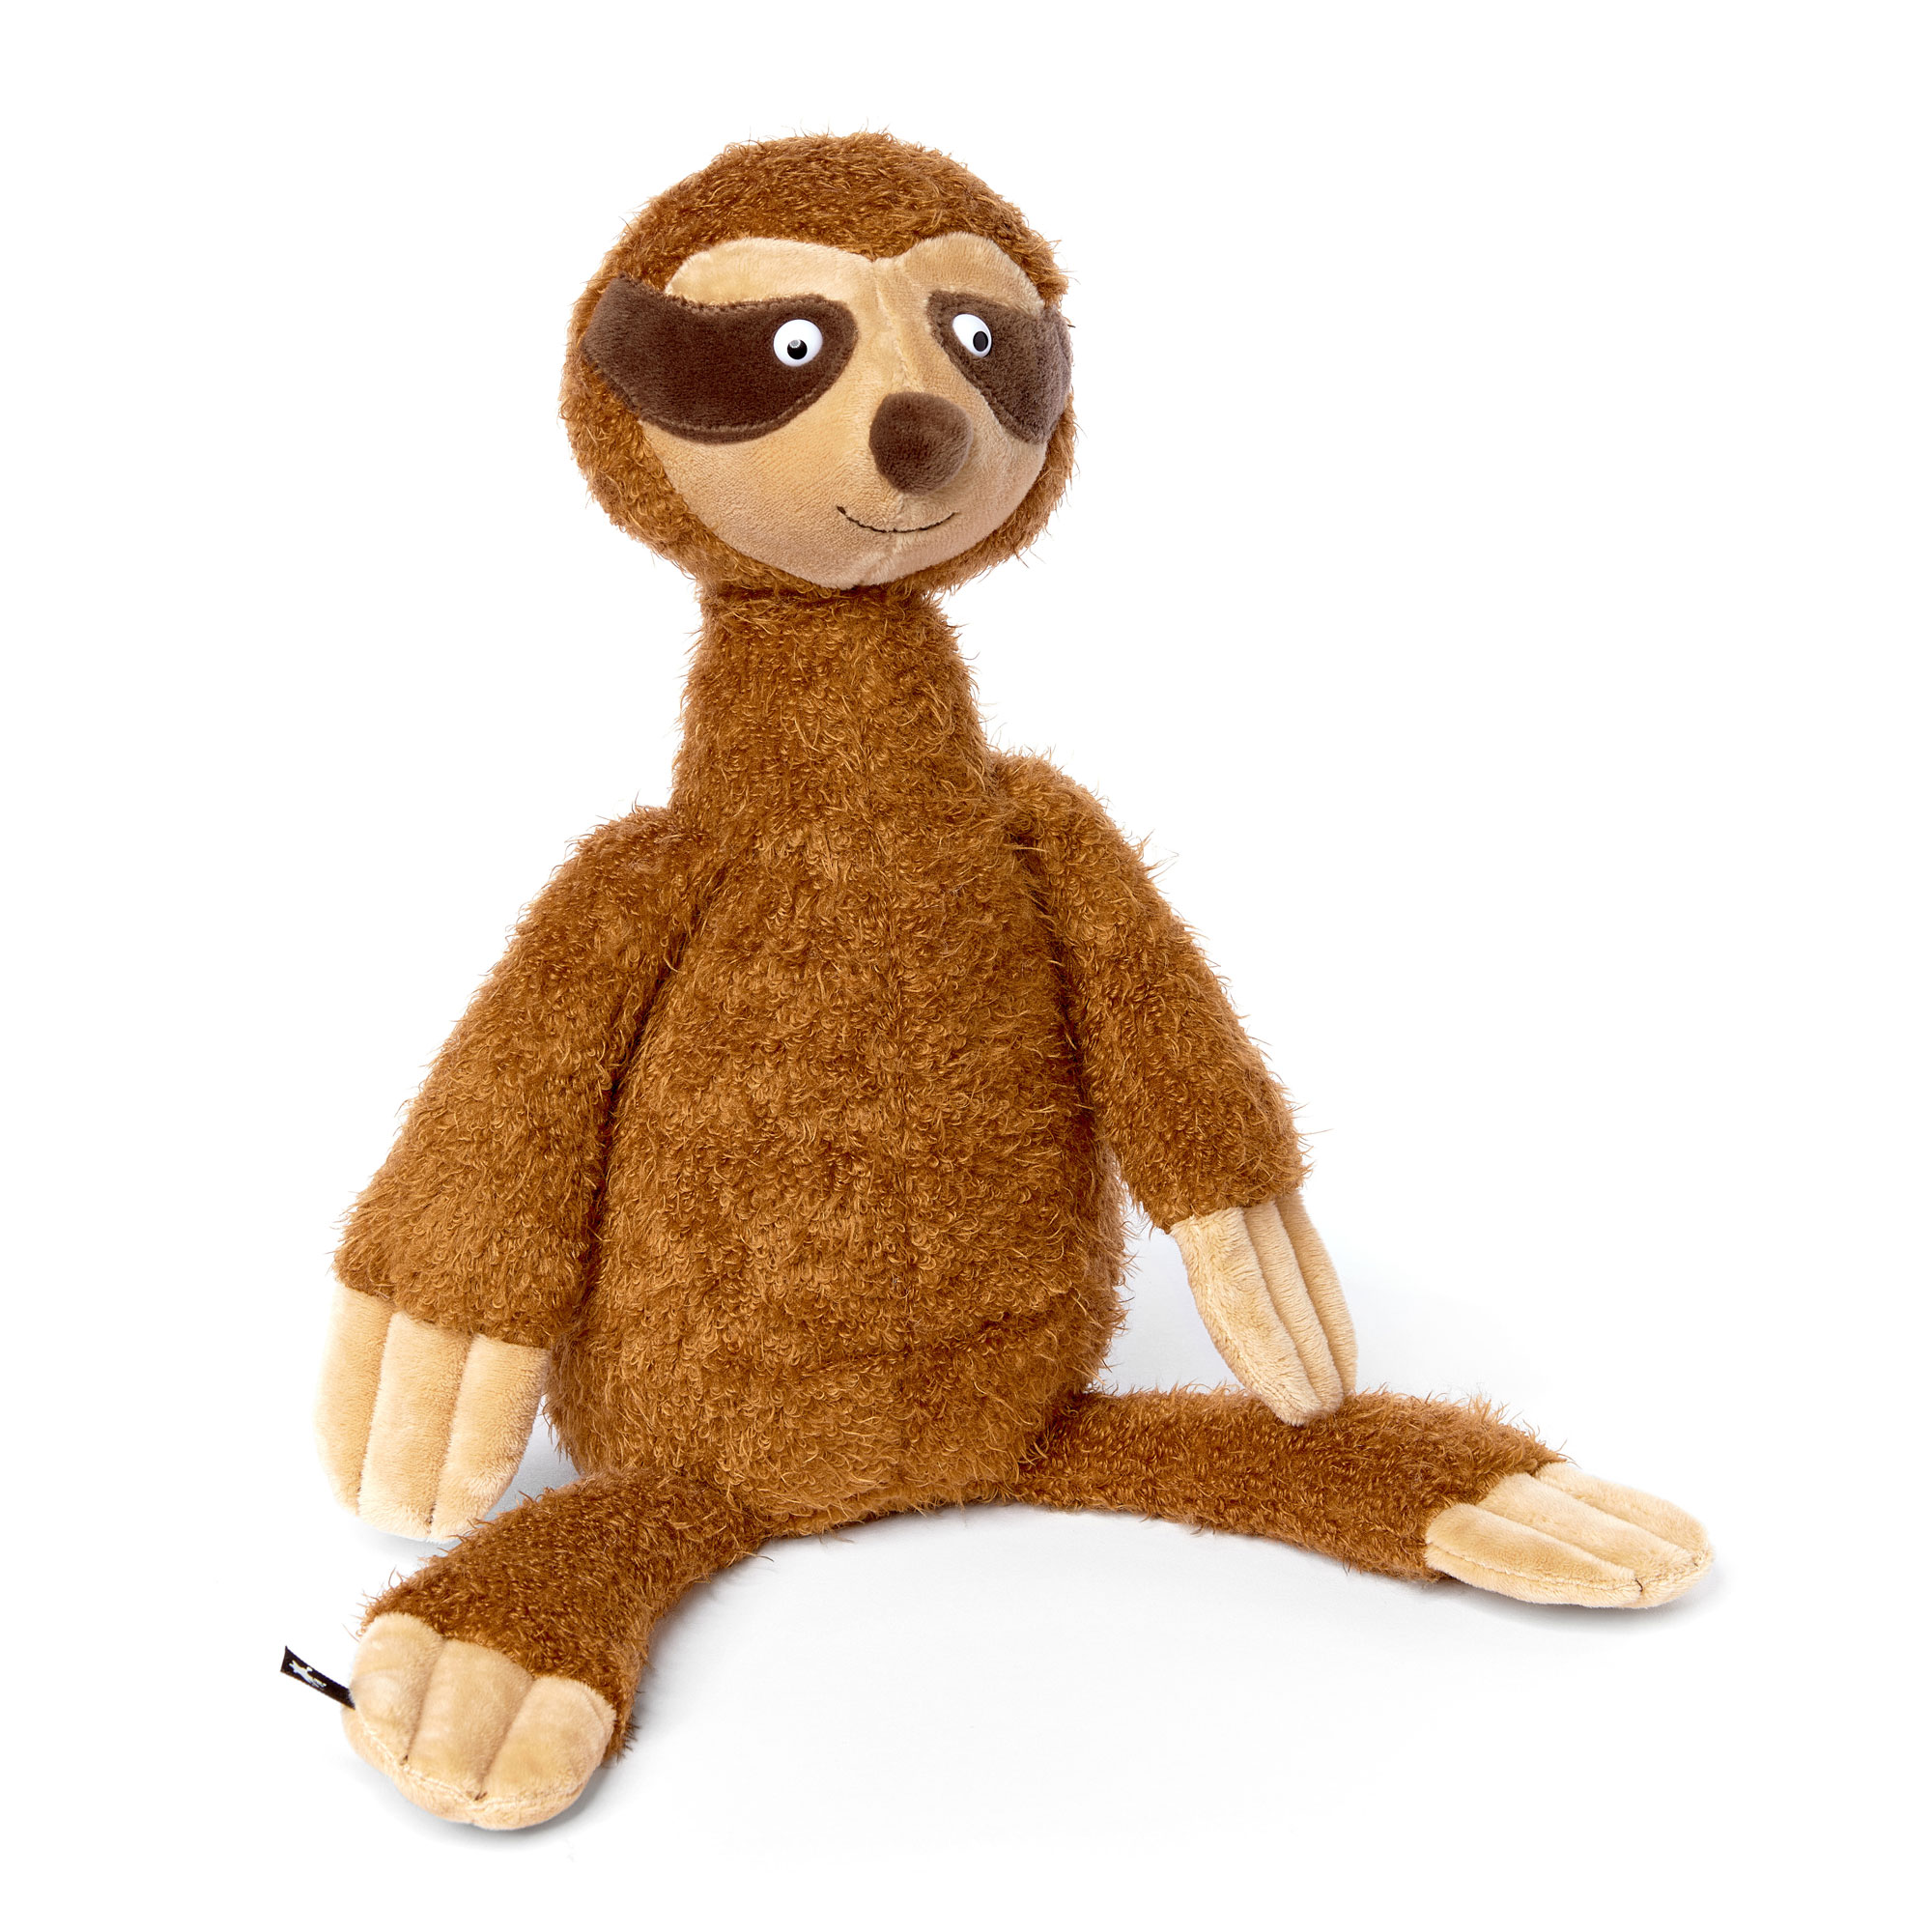 Plush toy sloth, Ach Good! Beasts